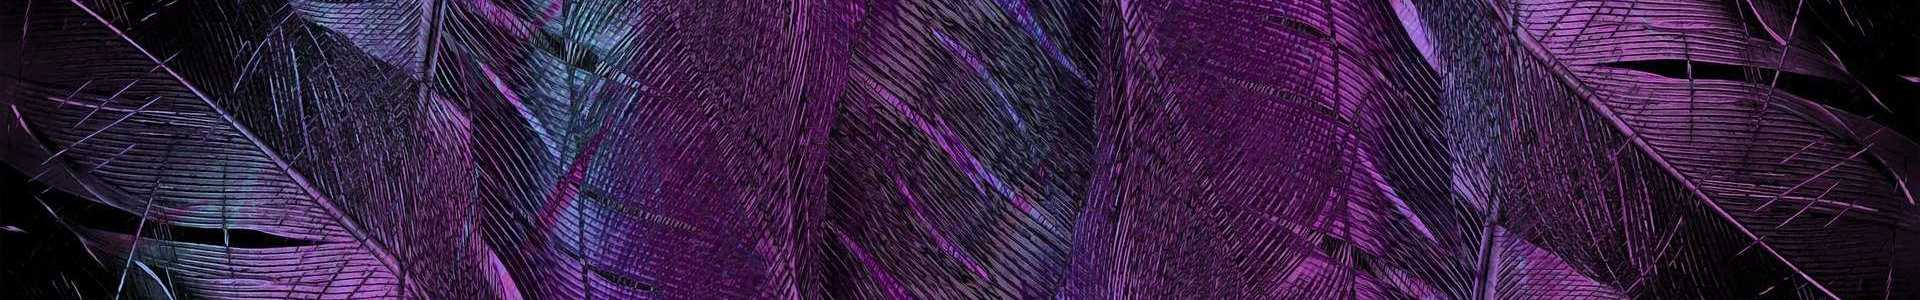 feather_purple_-_1920x300px.jpg